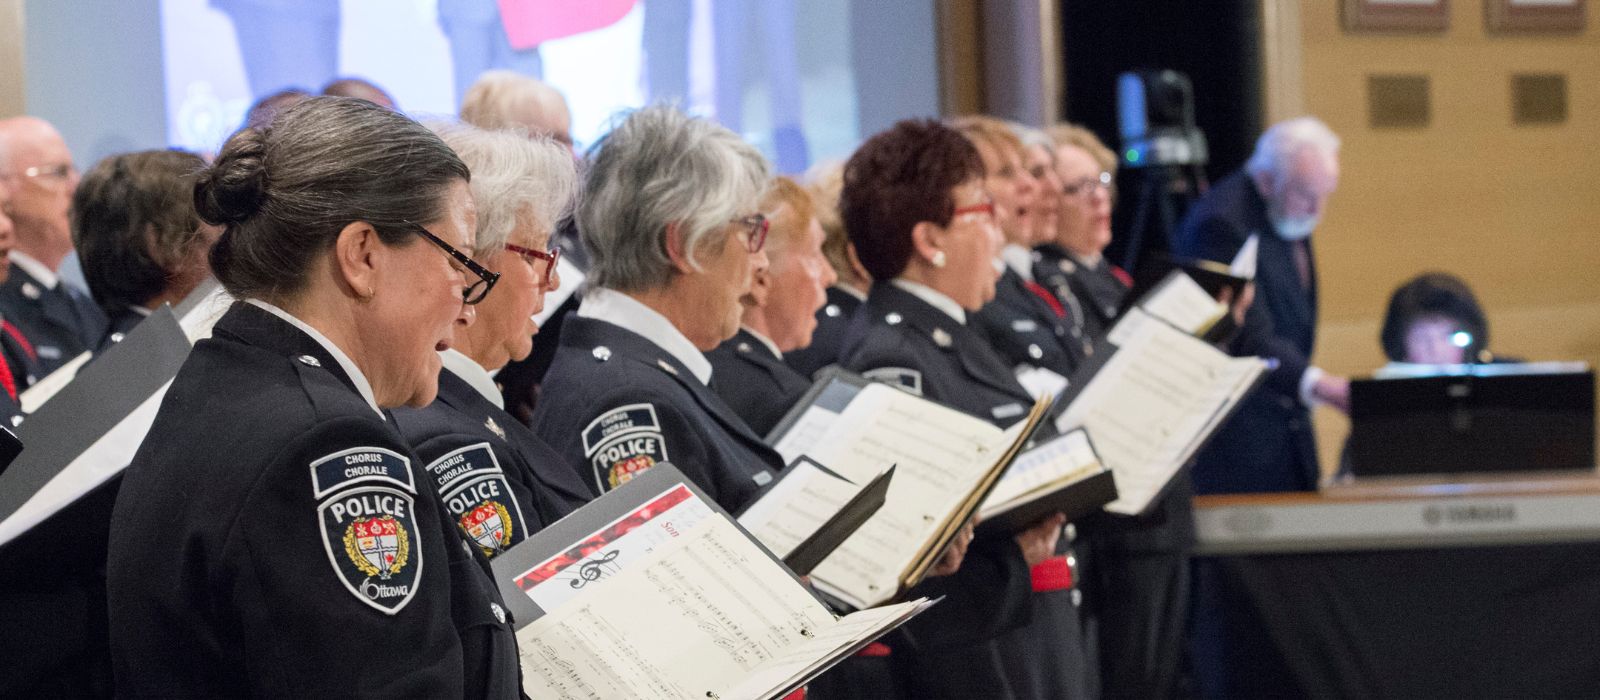 Members of the Ottawa Police Chorus singing.